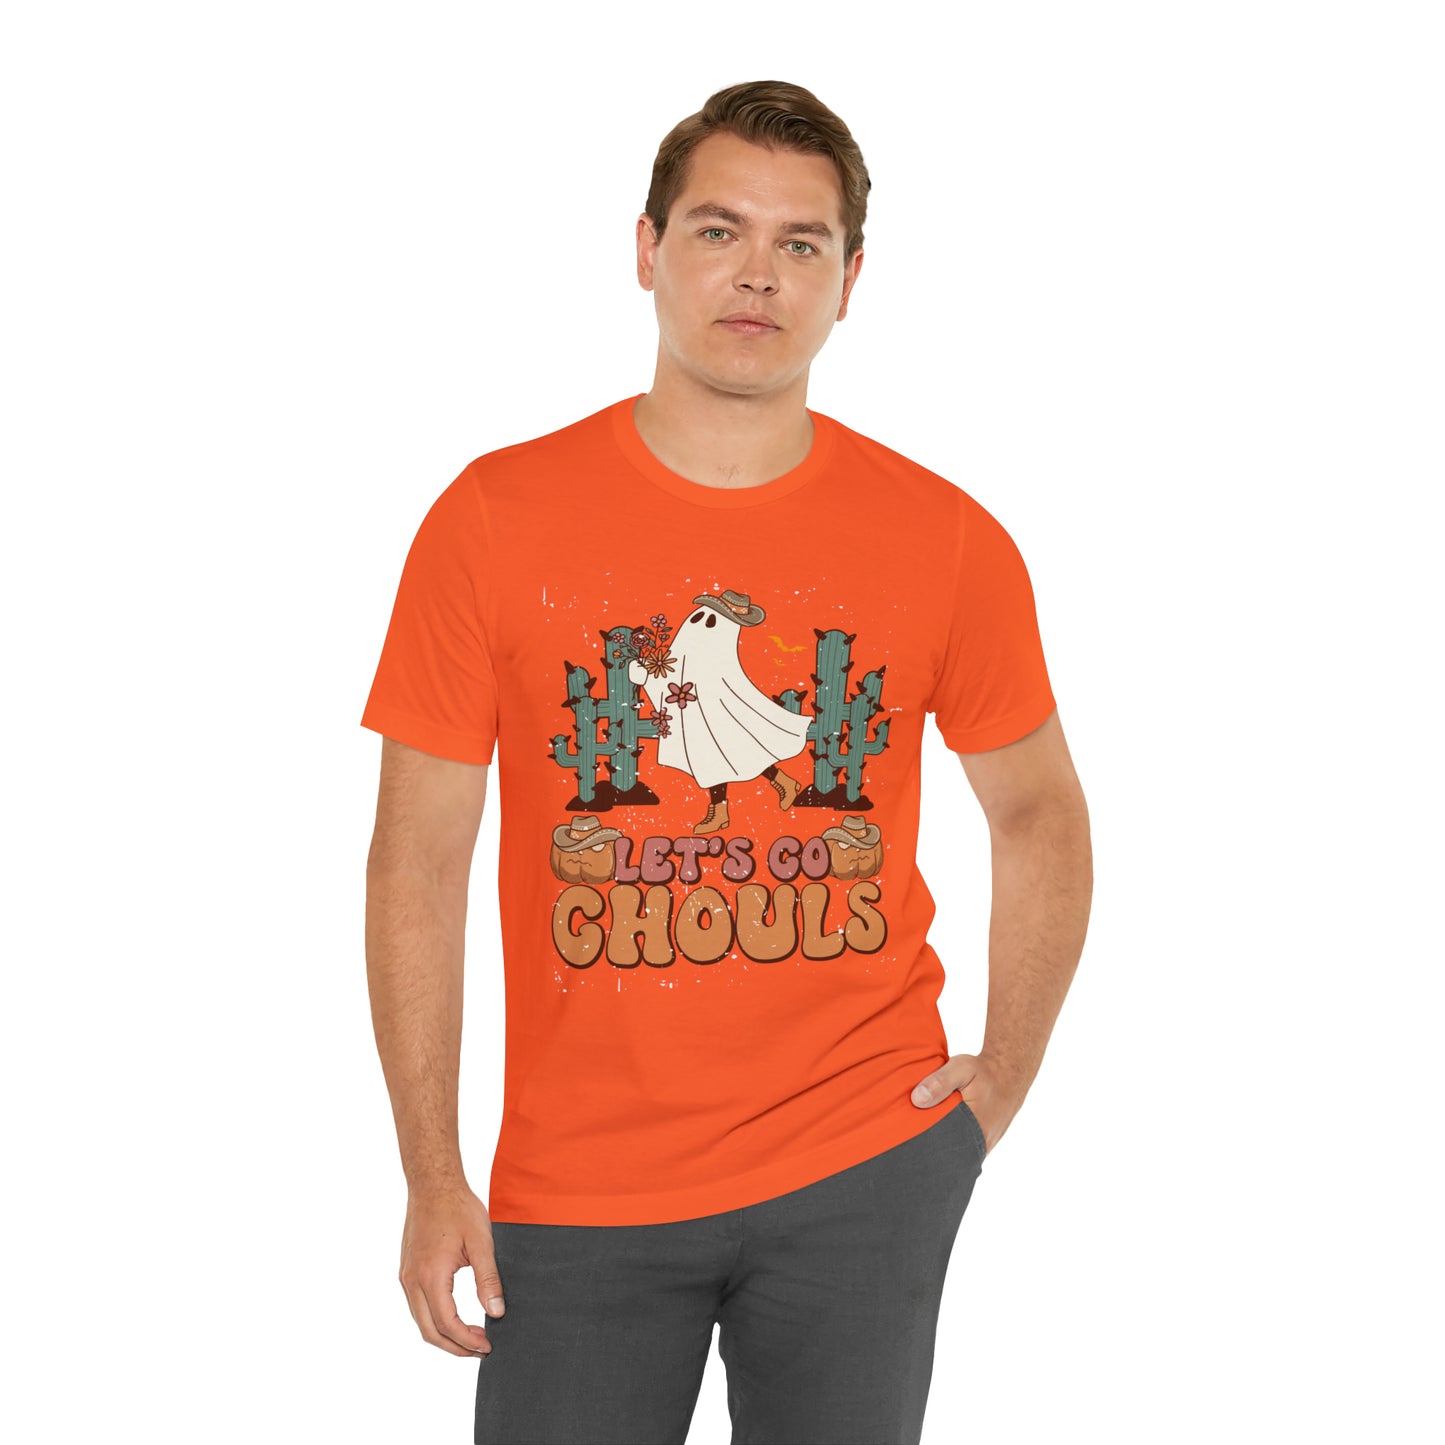 Lets Go Ghouls Shirt, Spooky Season Tee, Retro Halloween Cowgirl Shirt, Cowgirl Halloween Shirt, Vintage Ghost Shirt, T762